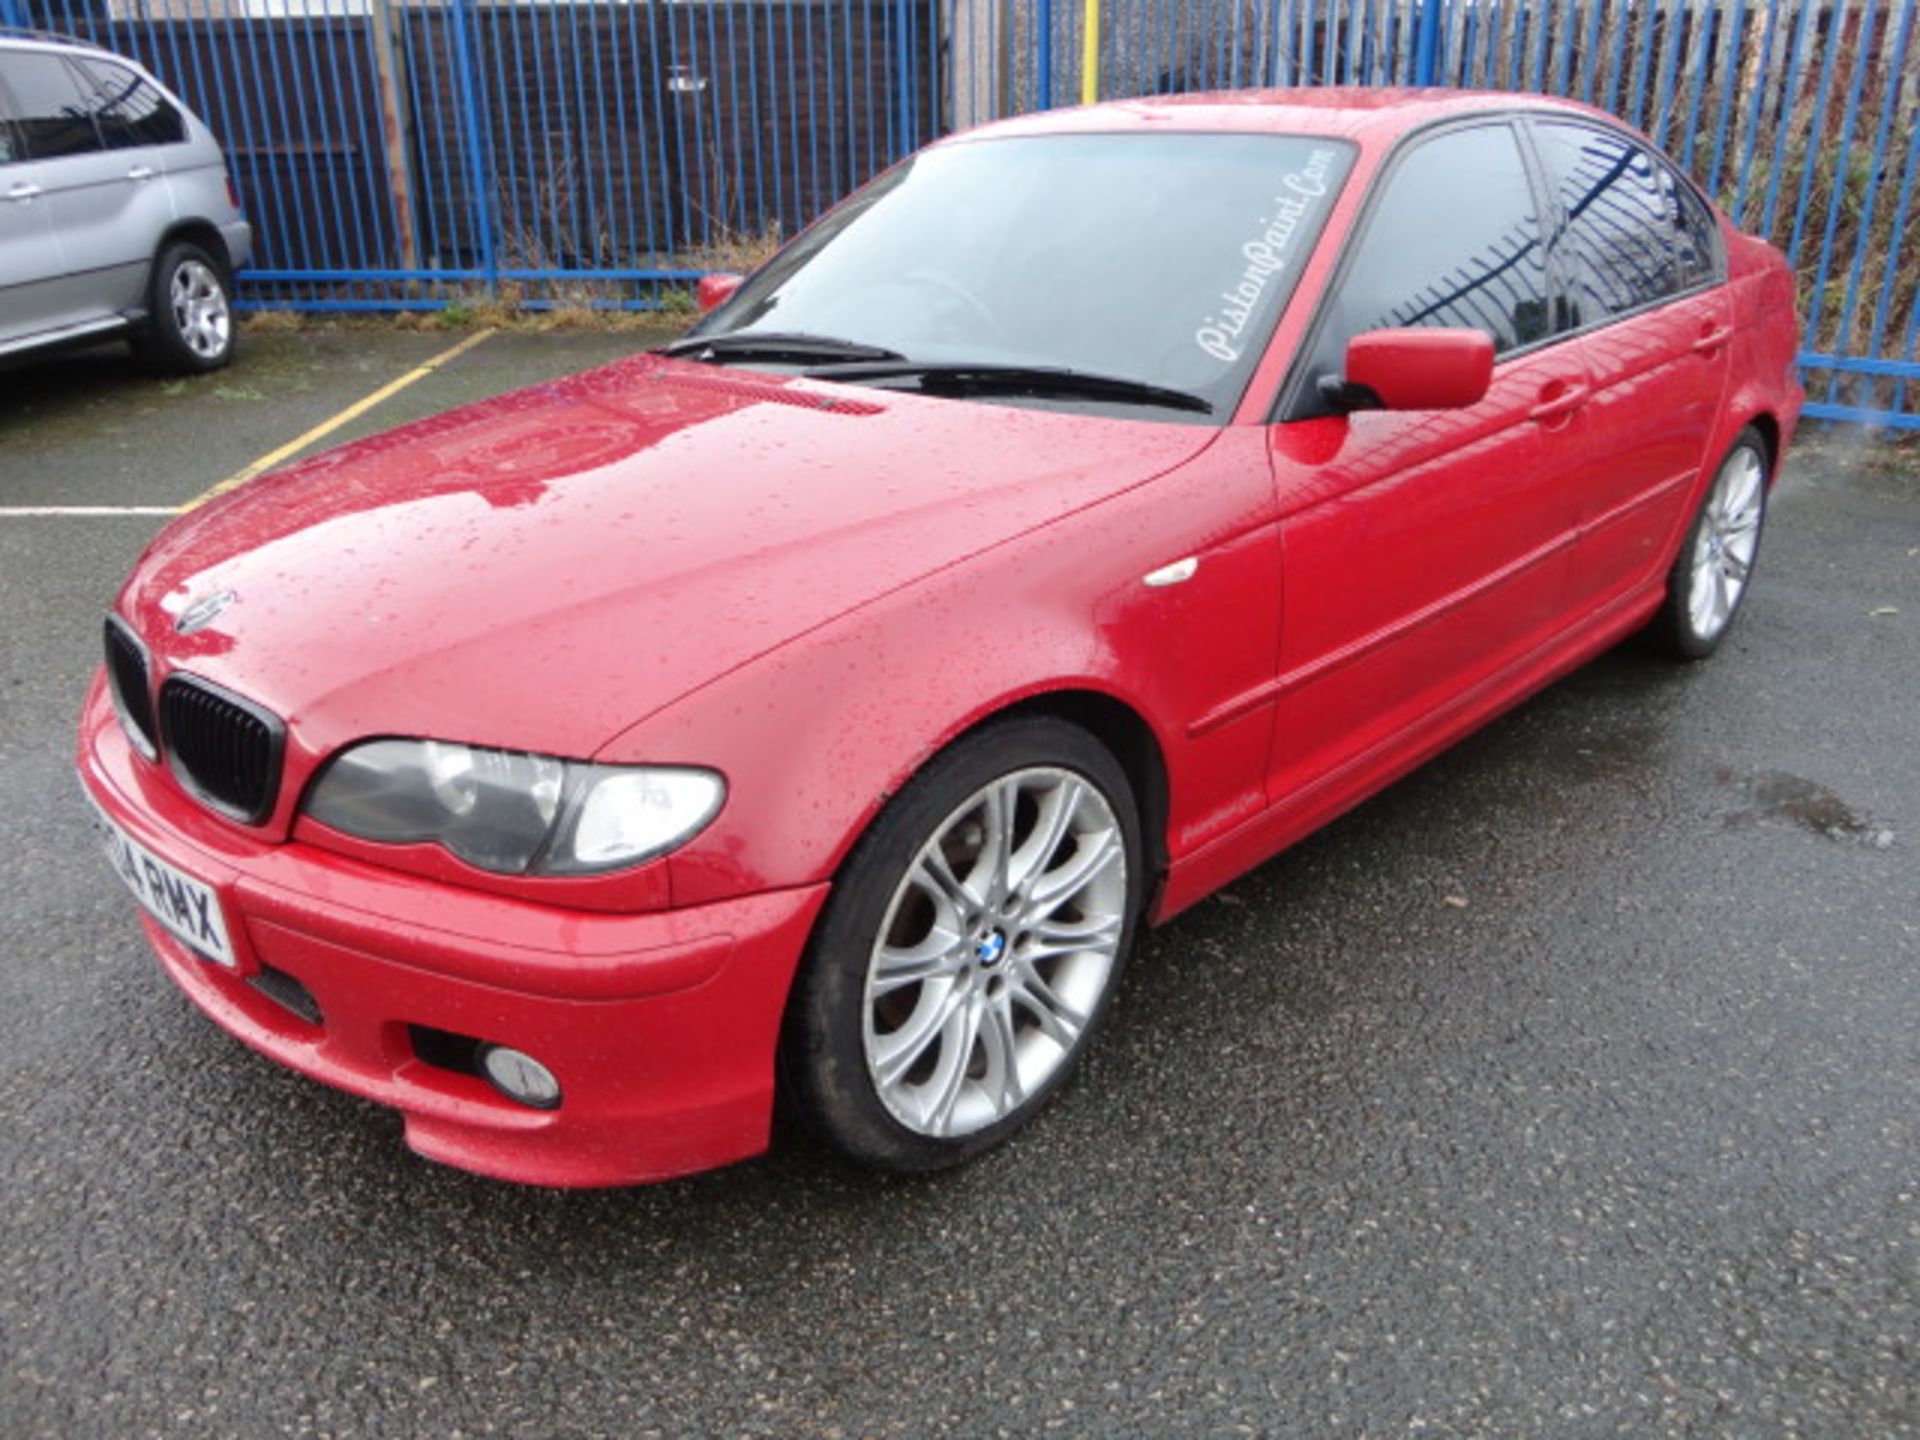 2004/04 REG BMW 320D SPORT 2.0 MANUAL METALLIC RED *NO VAT* - Image 7 of 10